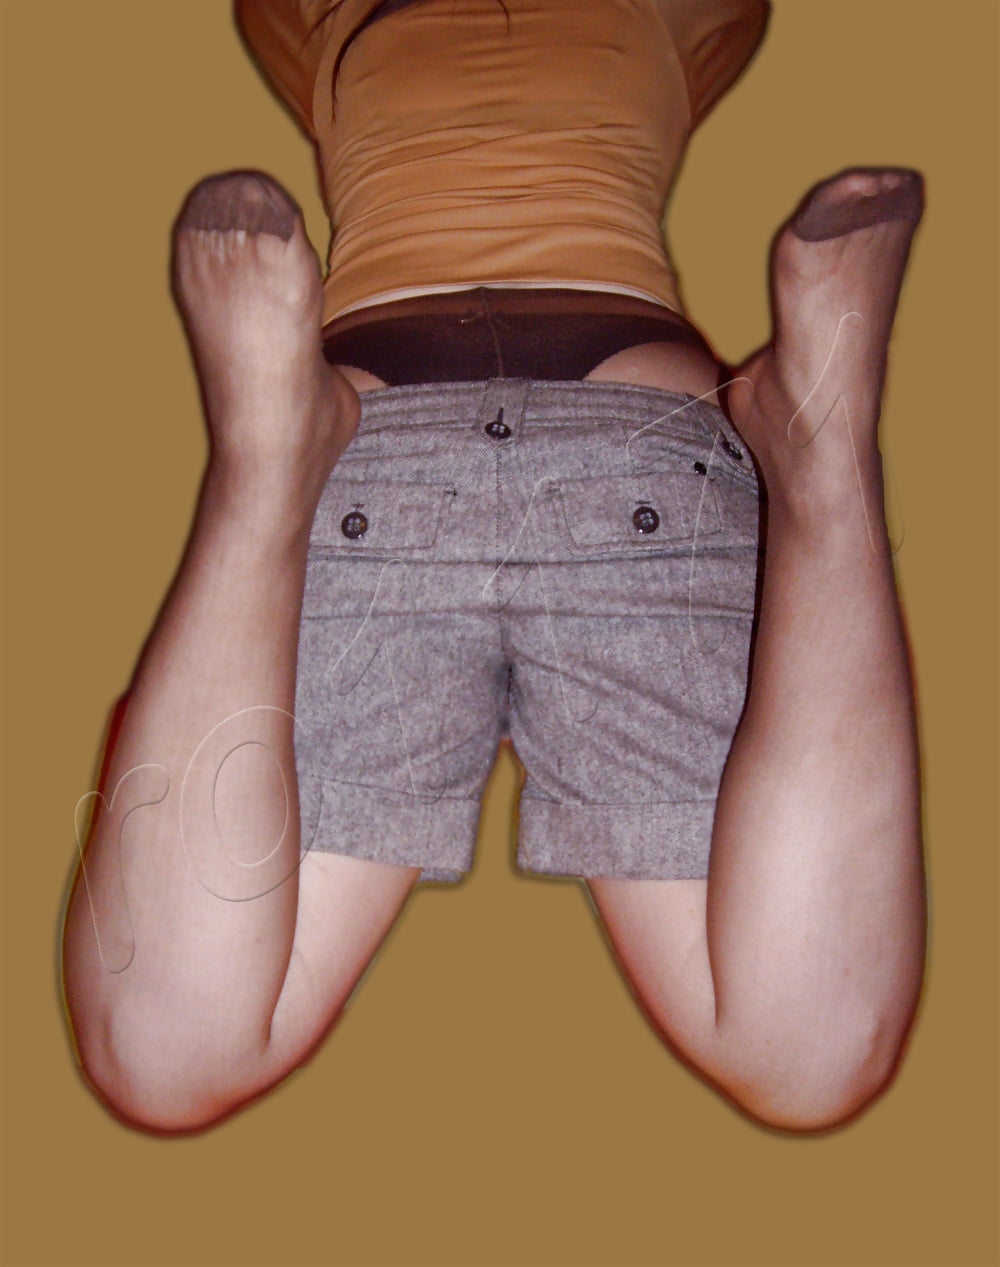 Pantyhose Wife Dangling Feet Tights Nylon Legs Ass 10 Pics